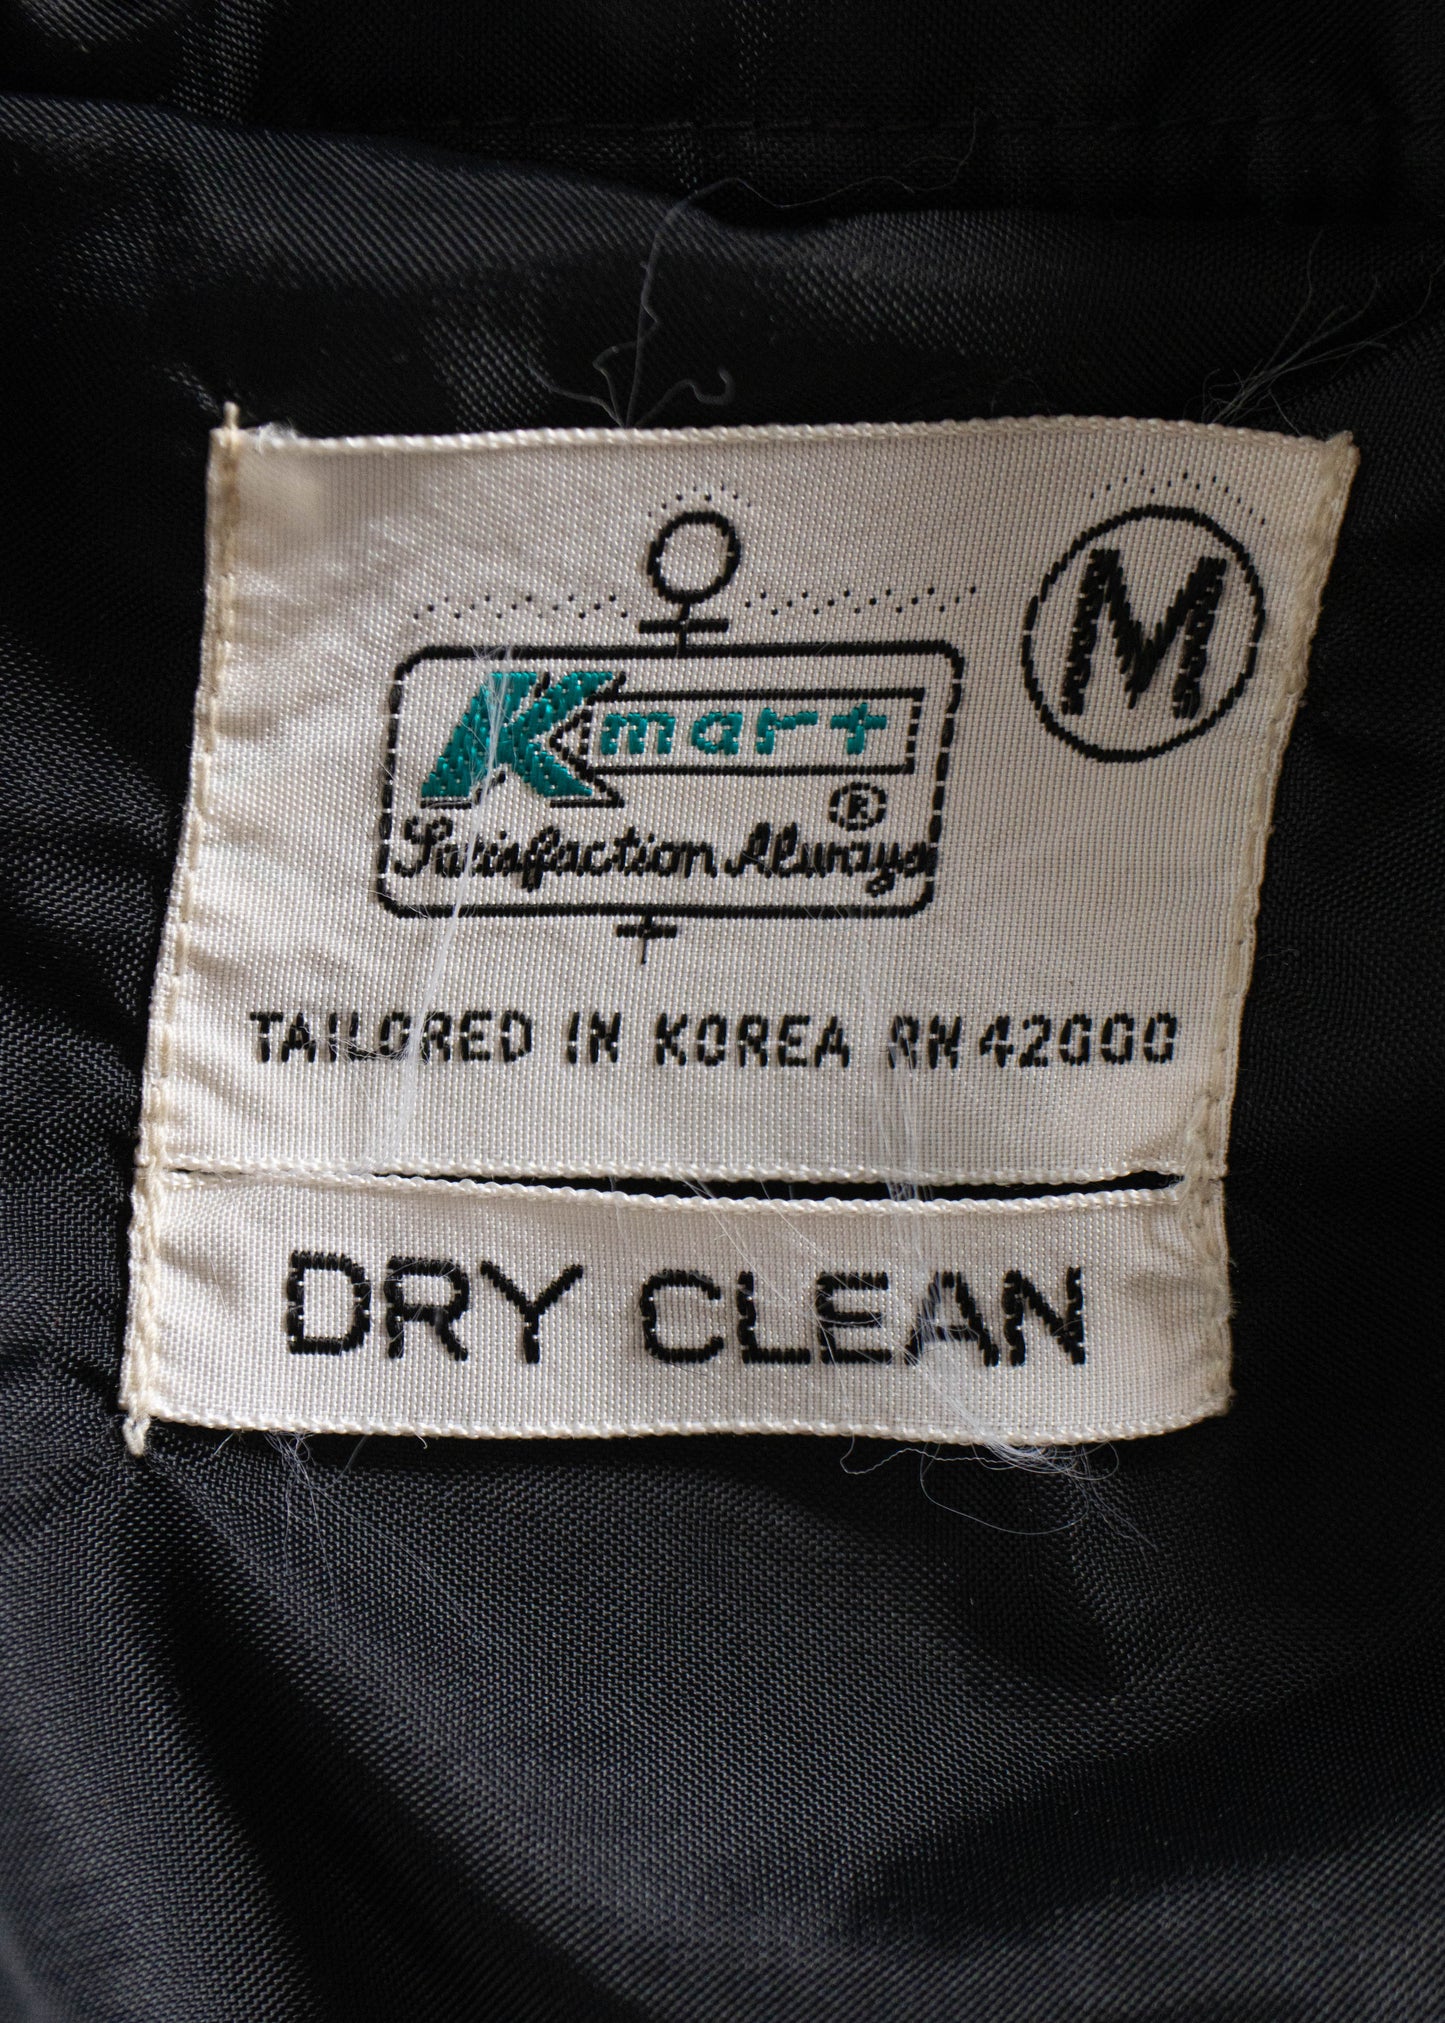 Vintage 1990s Kmart Wool Flannel Button Up Shirt Size S/M